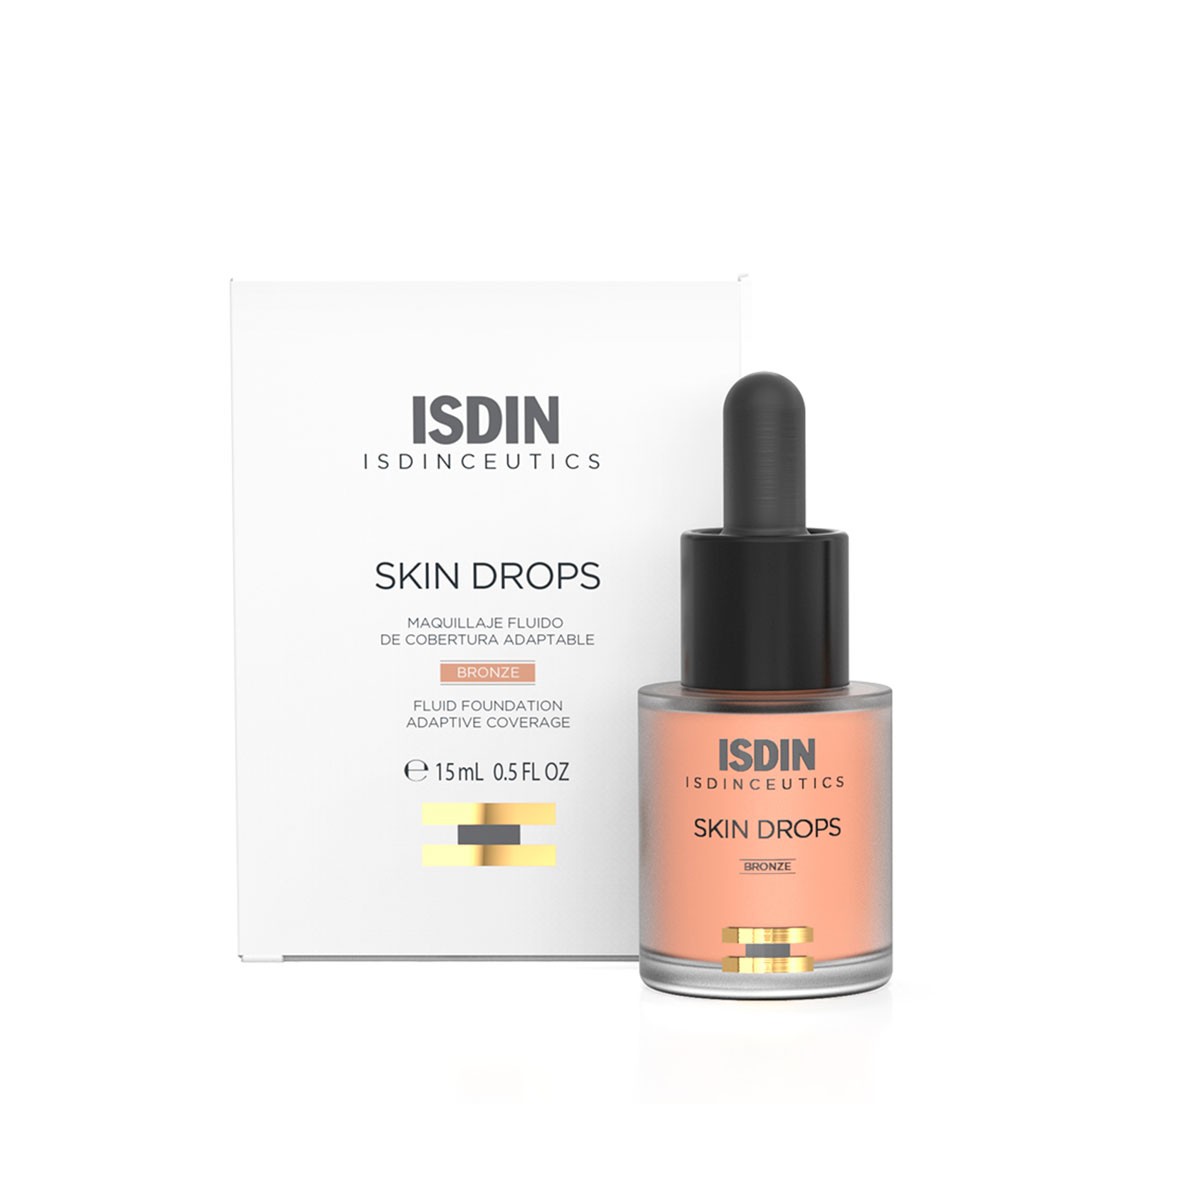 Isdinceutics Skin Drops Bronce, 15ml.